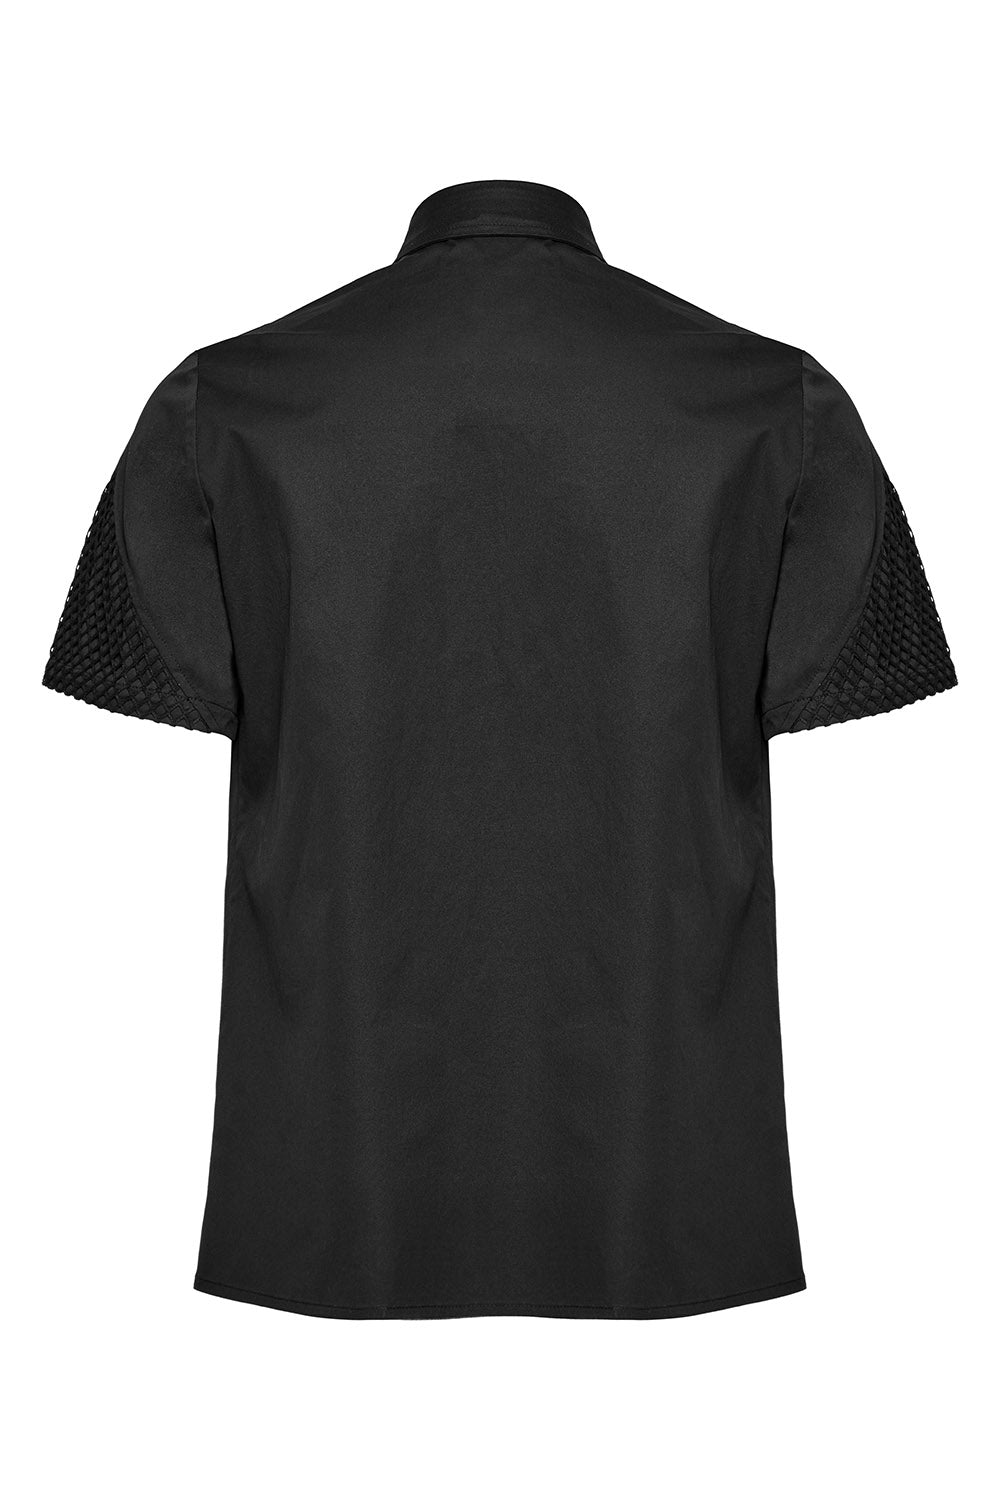 mens black fishnet emo shirt